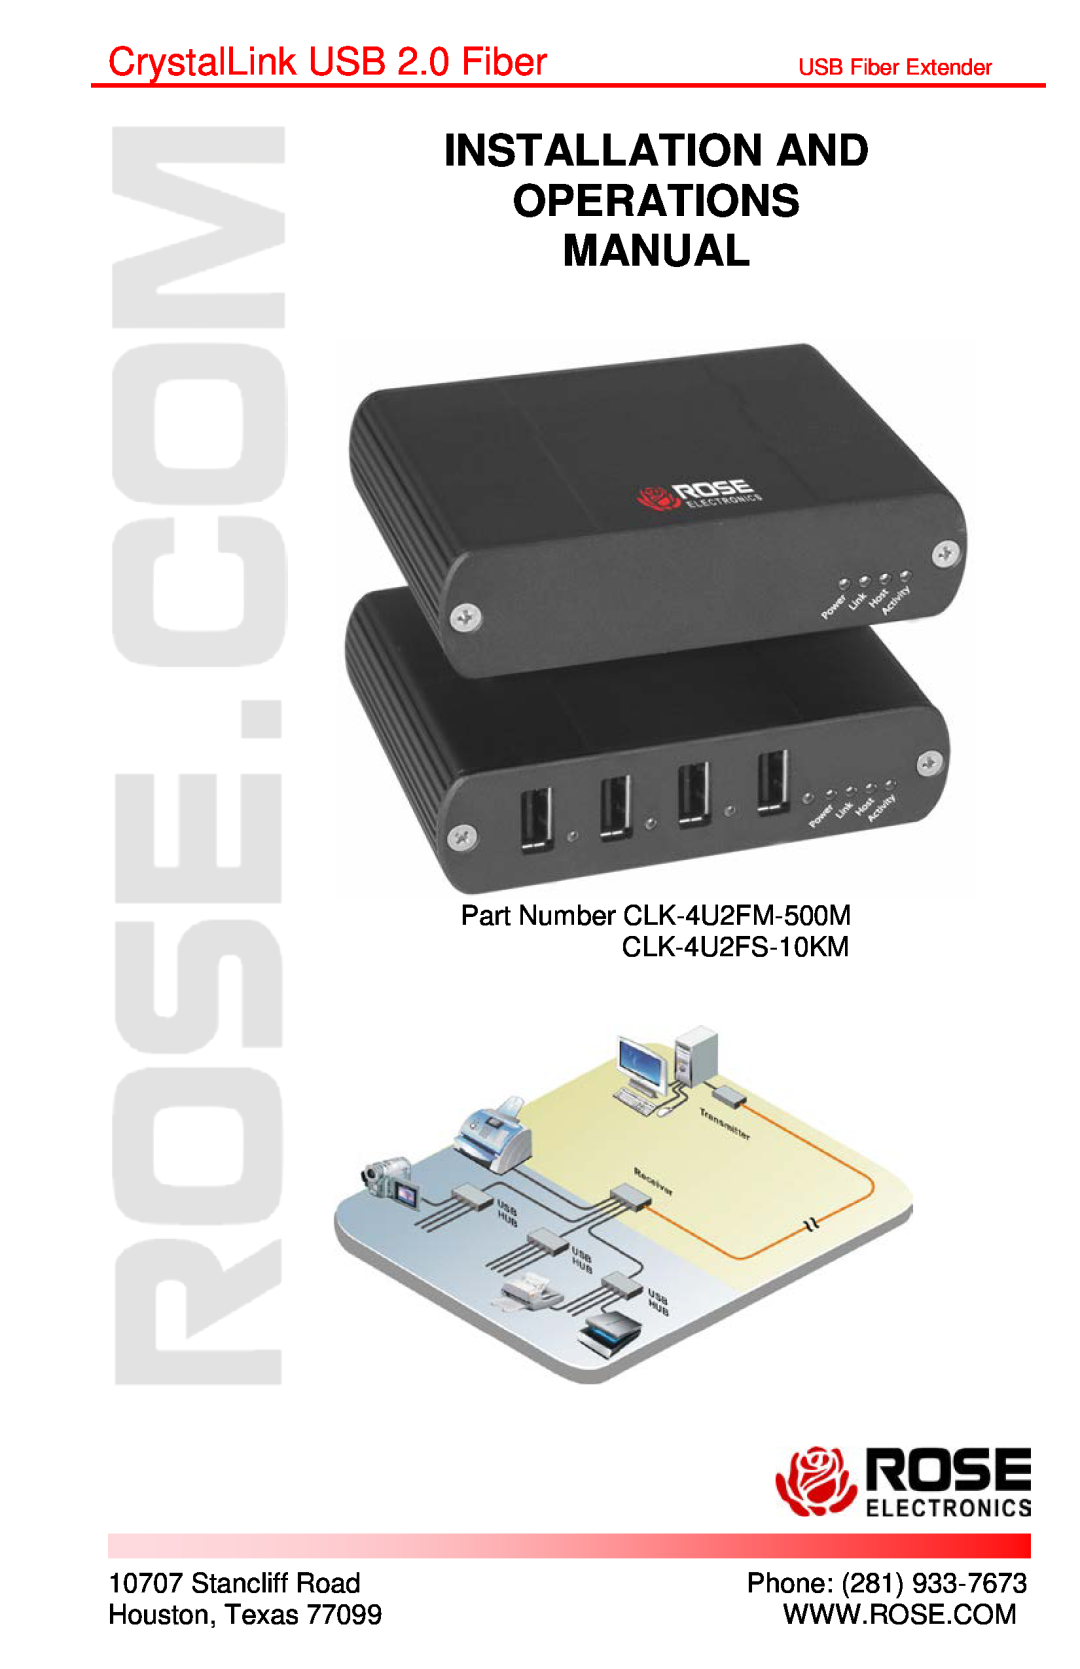 Rose electronic CLK-4U2FM-500M manual Installation And Operations Manual, CrystalLink USB 2.0 Fiber, USB Fiber Extender 